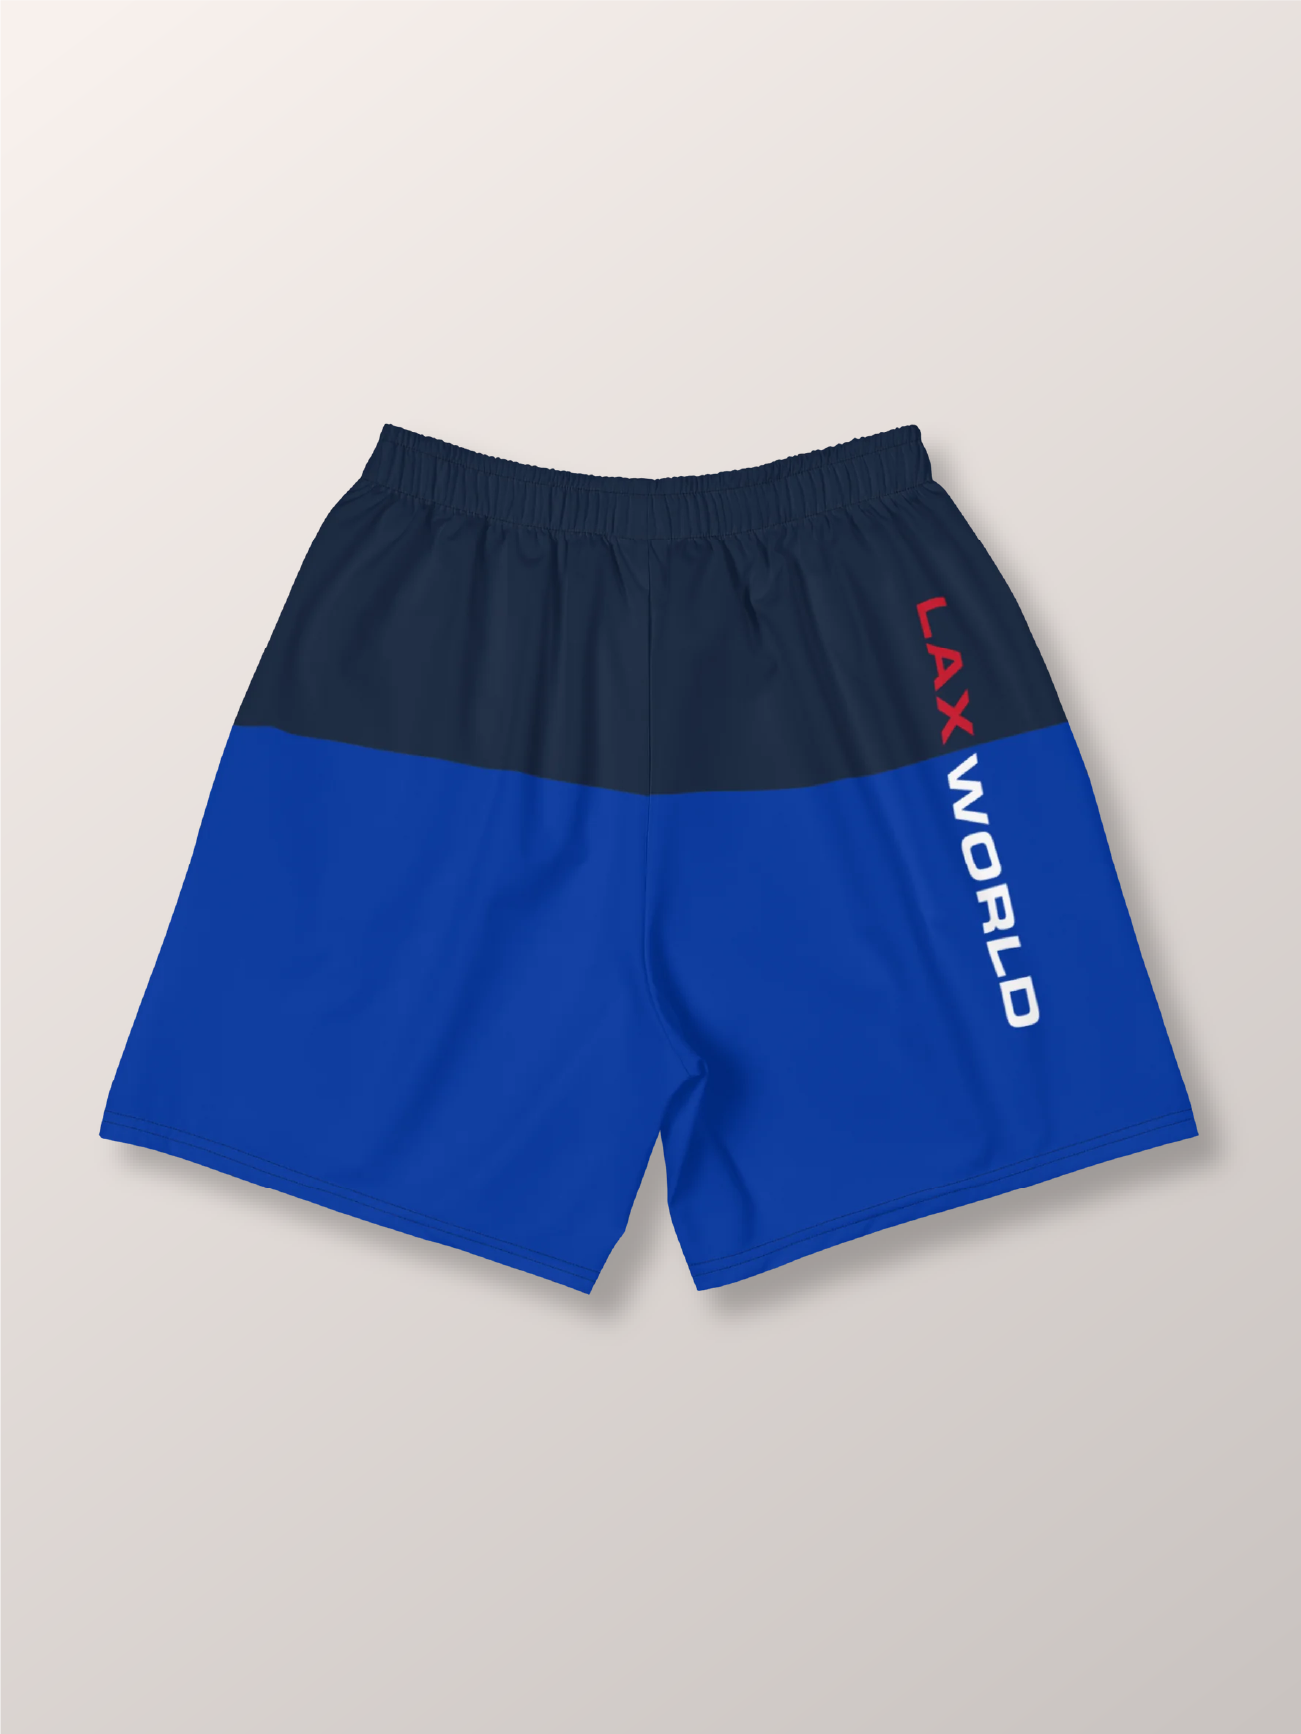 Premium Creator’s Royal Blue Athletic Lacrosse Short - back 